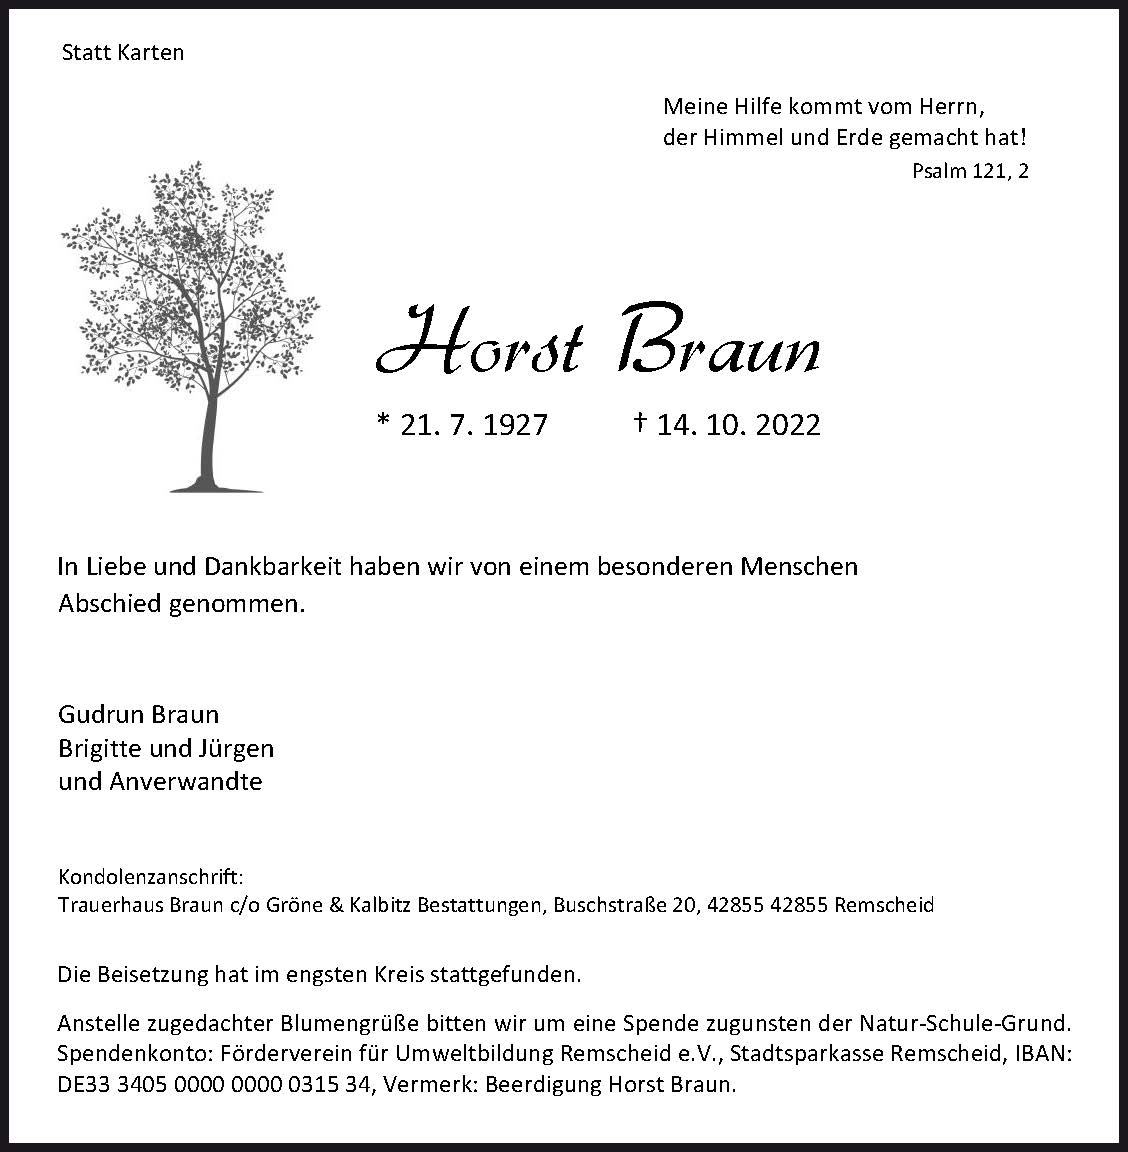 Horst Braun